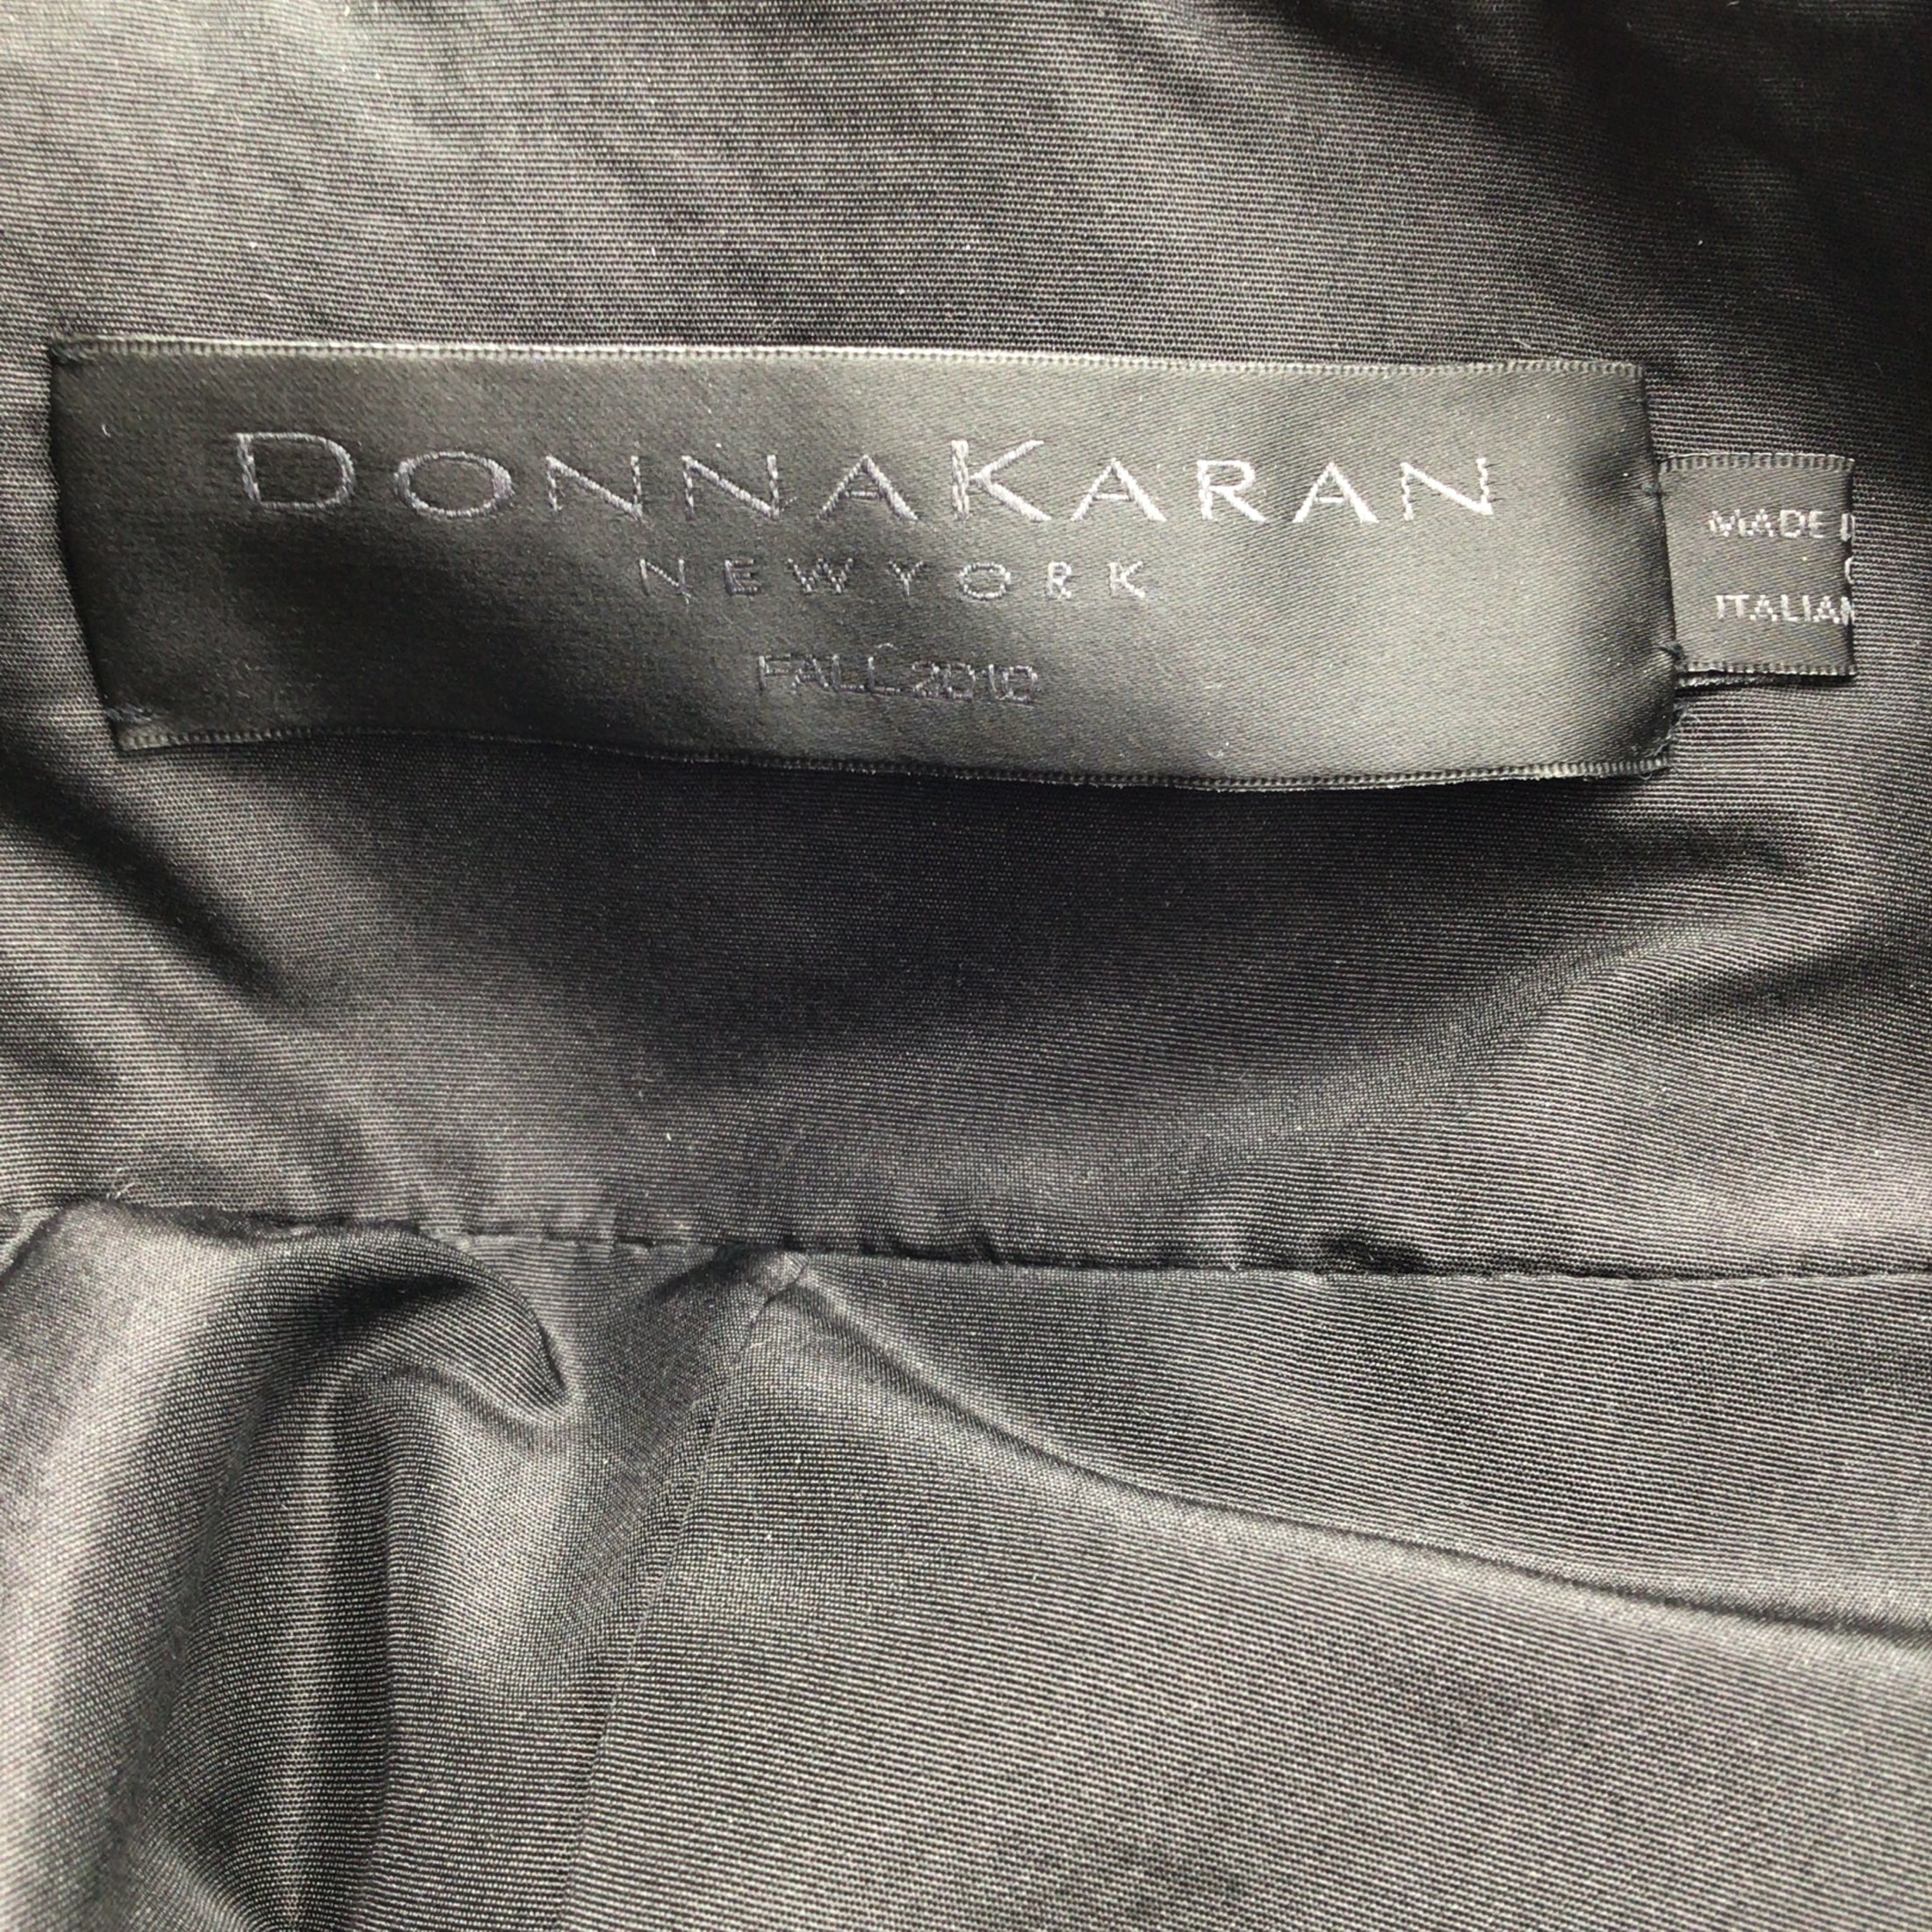 Donna Karan New York Fall 2010 Black and Grey Mid-Length Wool Tweed Coat